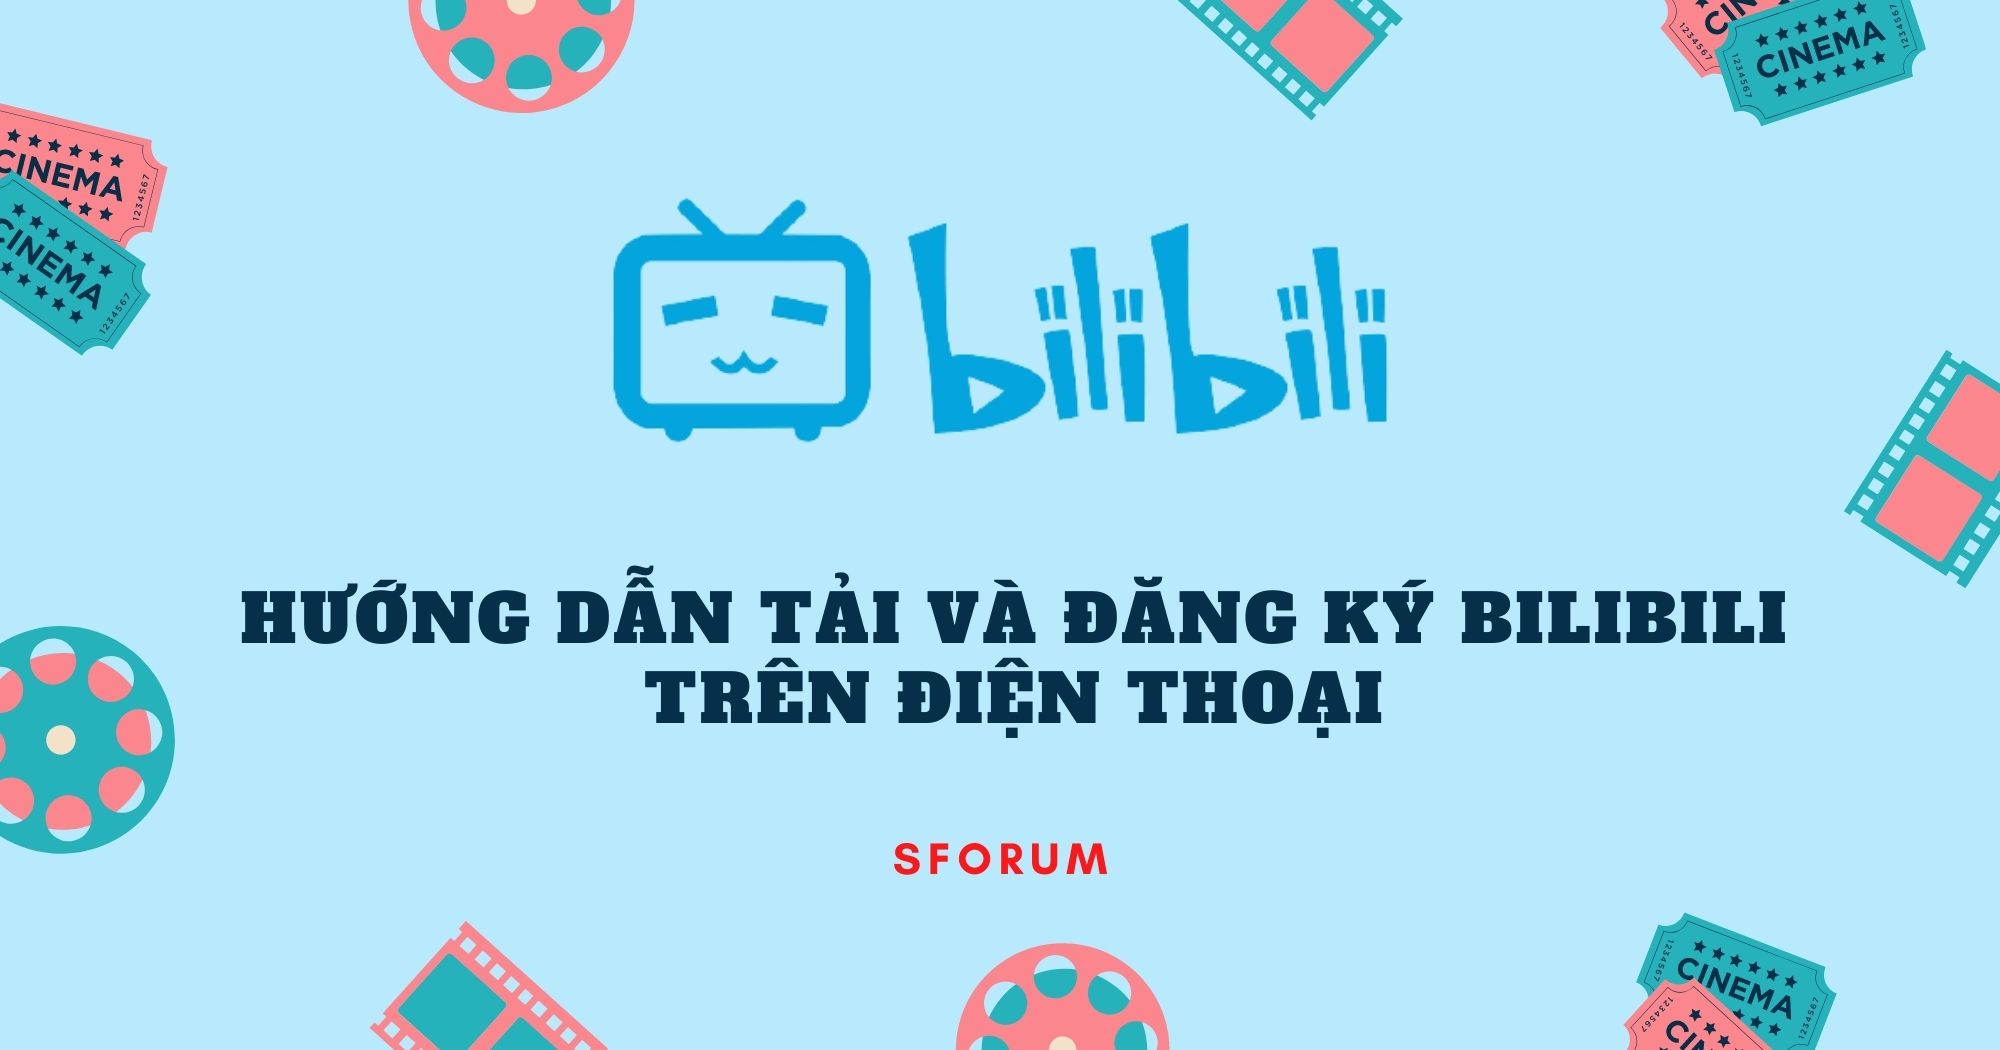 Bilibili - Video Sharing Platform - Made with Vue.js